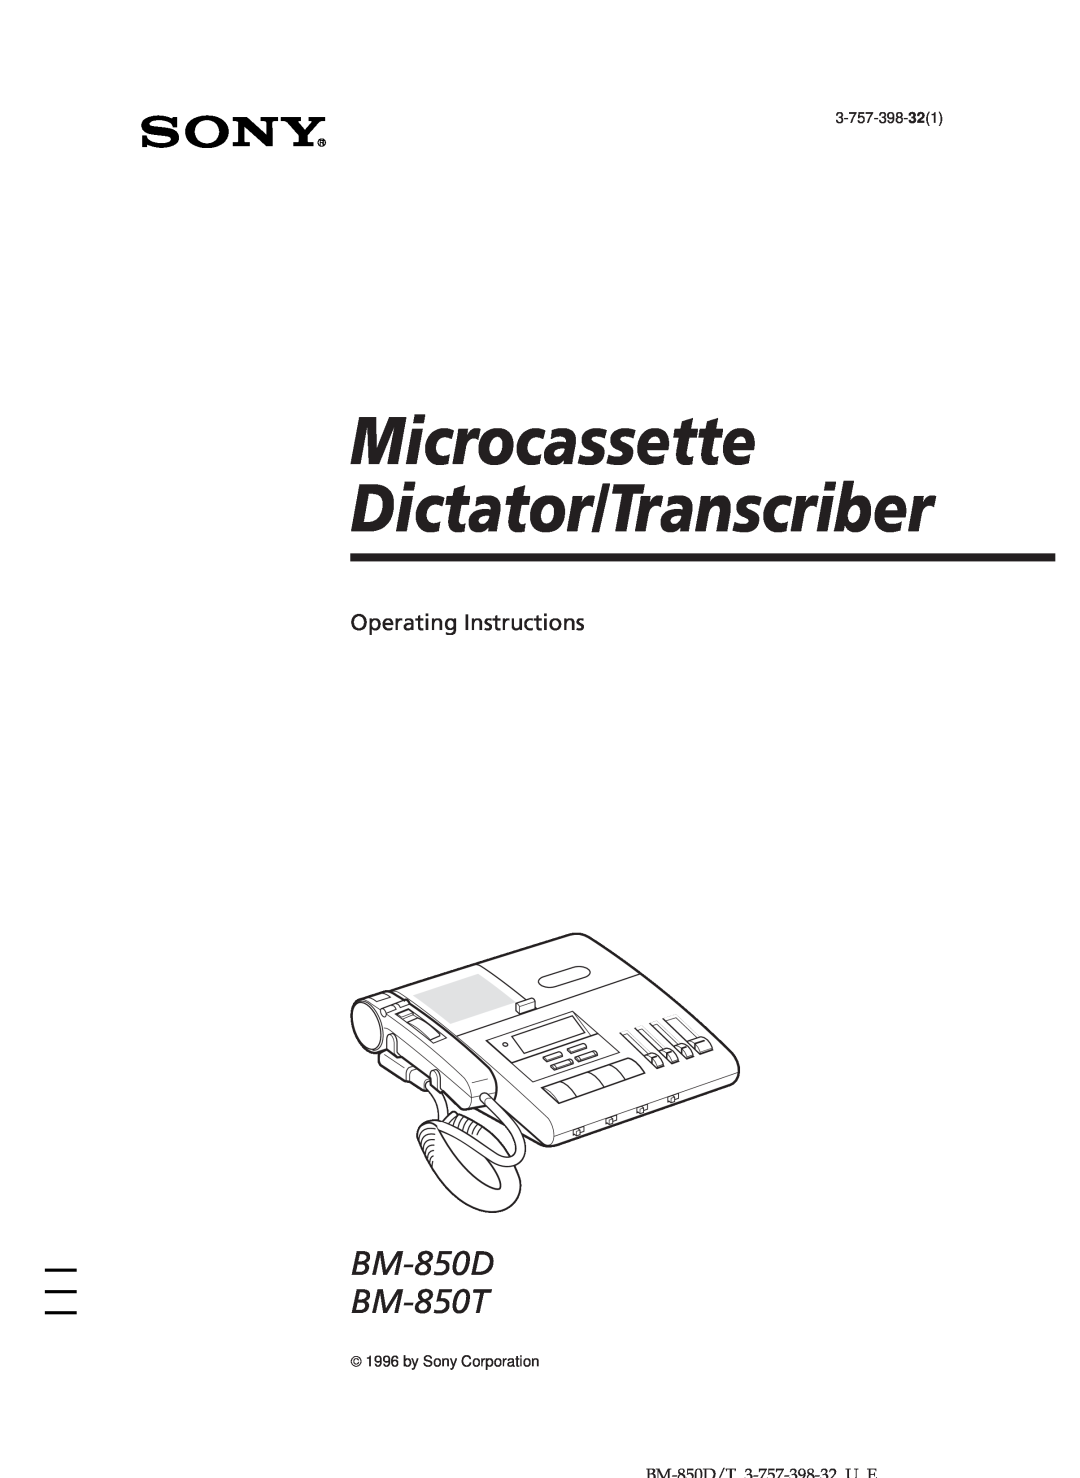 Sony manual Microcassette Dictator/Transcriber, BM-850D BM-850T, Operating Instructions, 3-757-398-321 